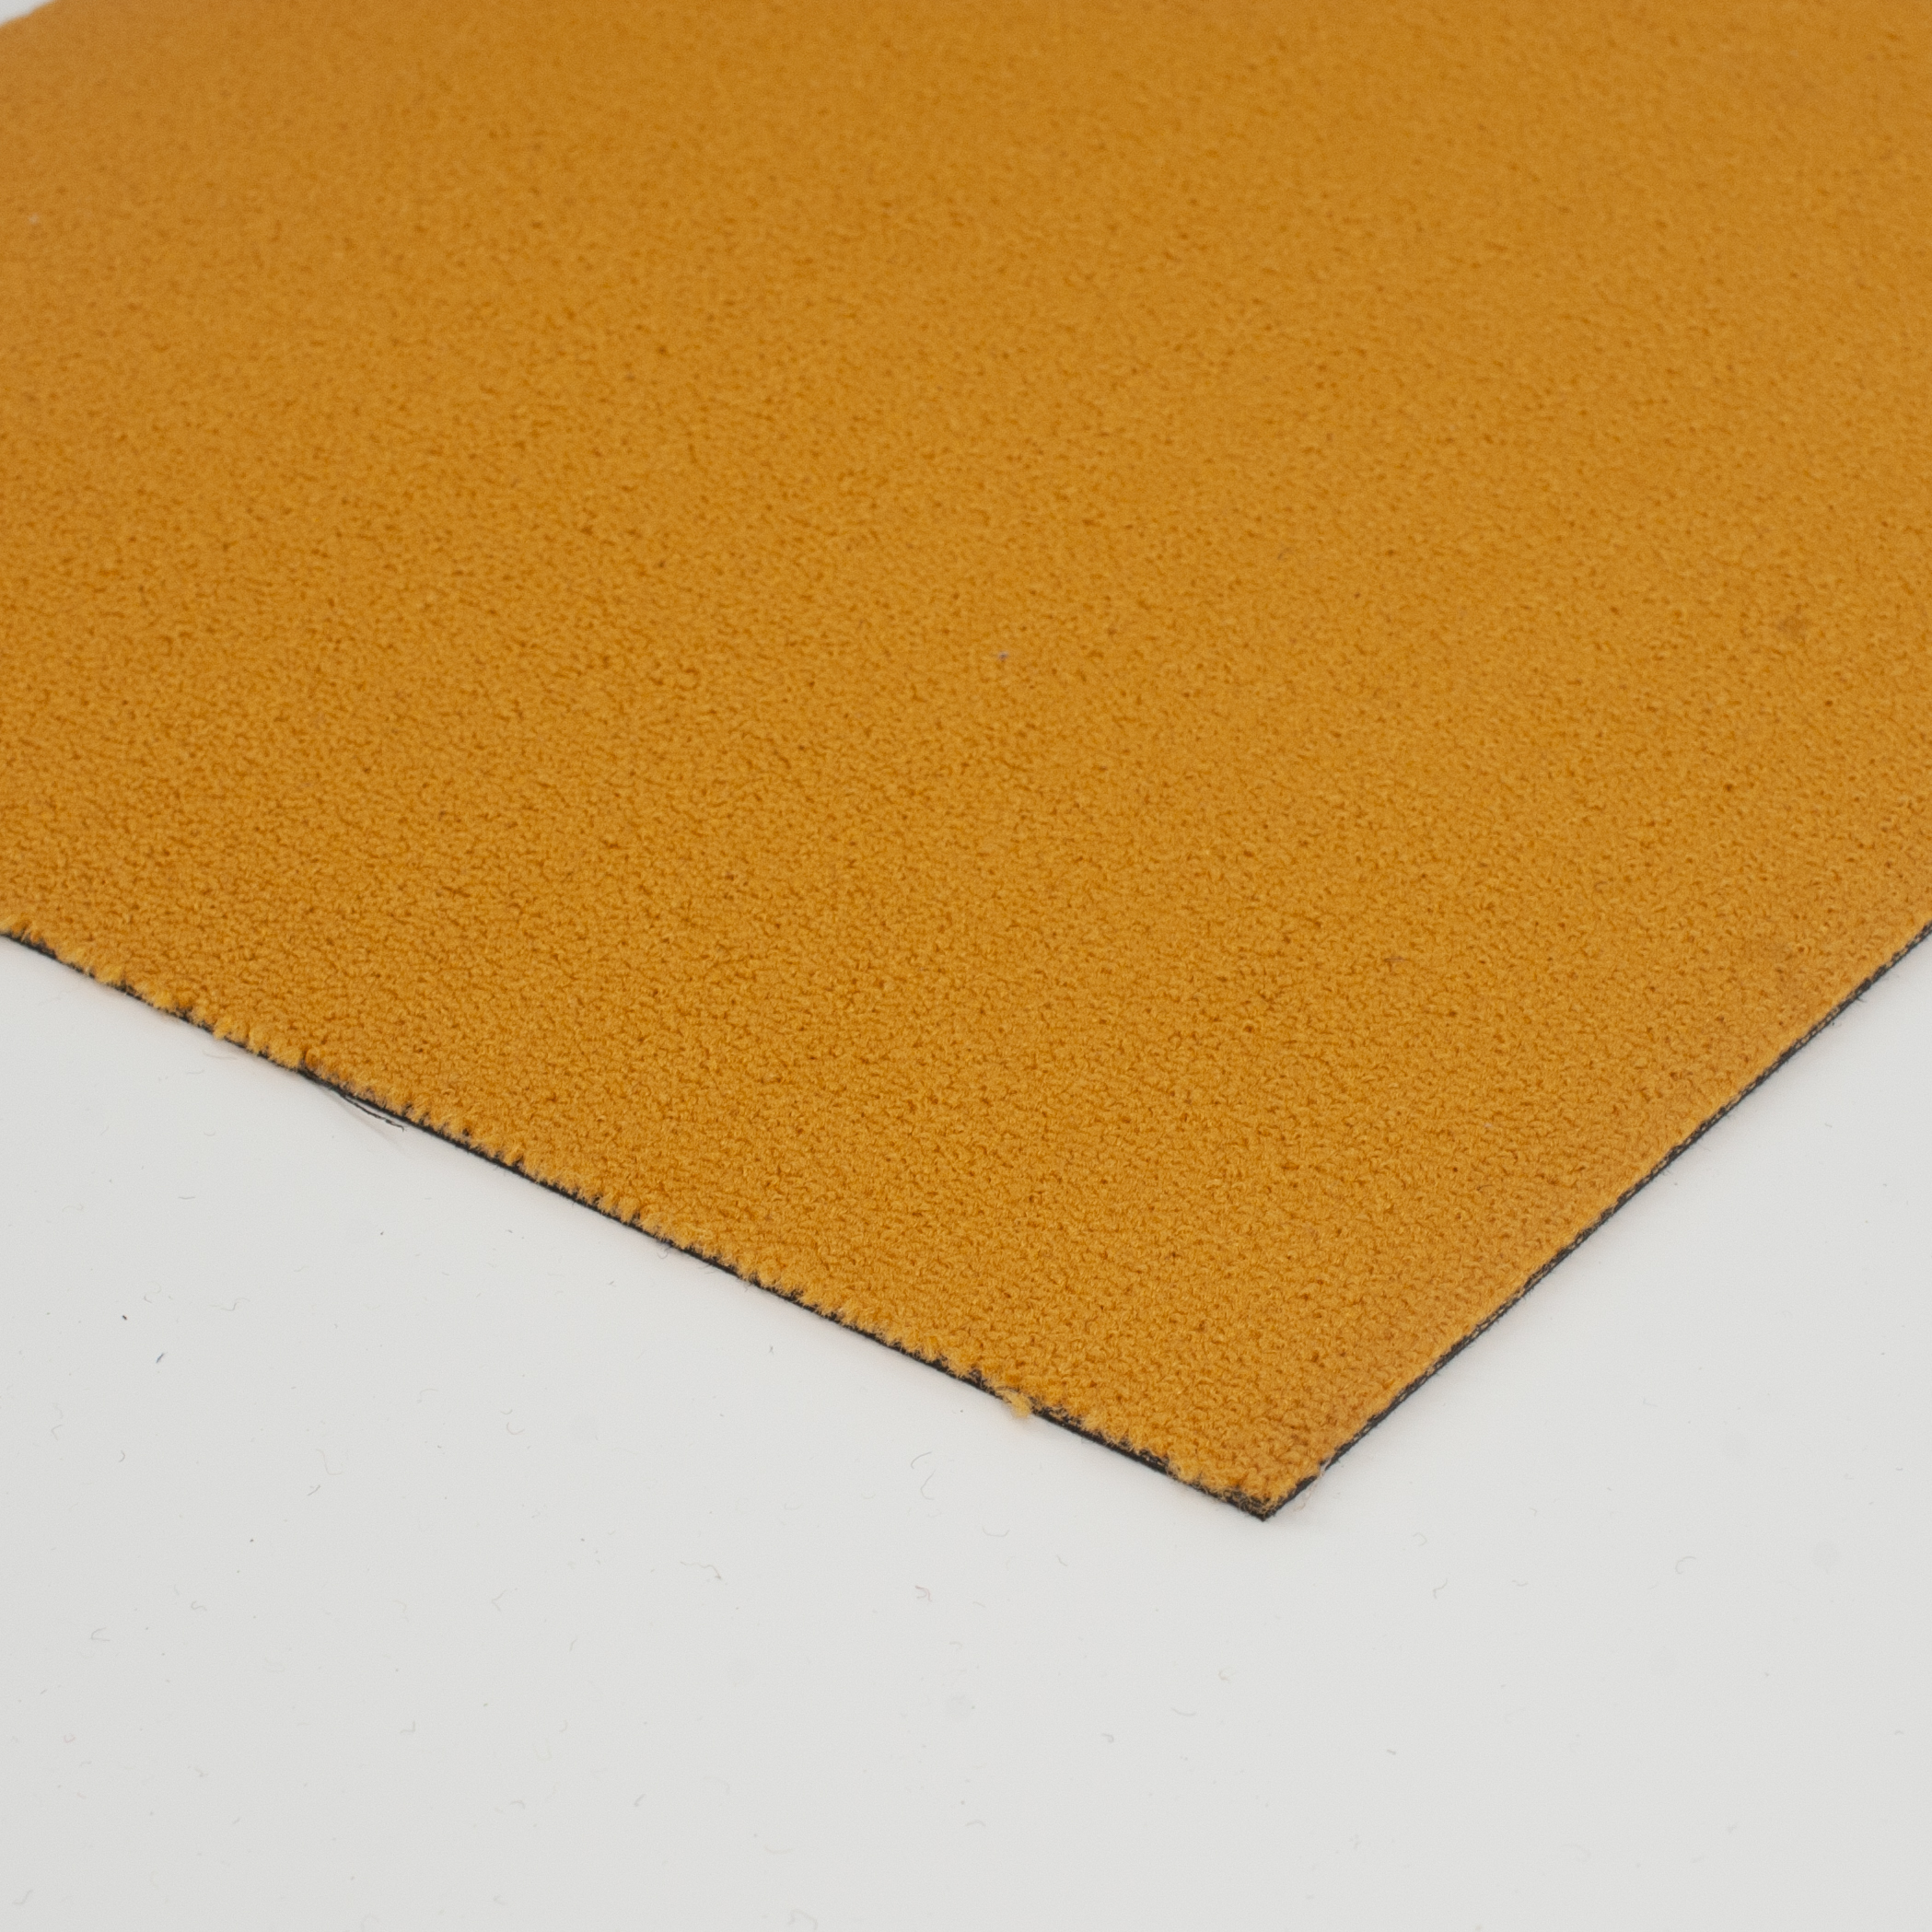 Azulejos de alfombra rectangulares de calidad impermeable